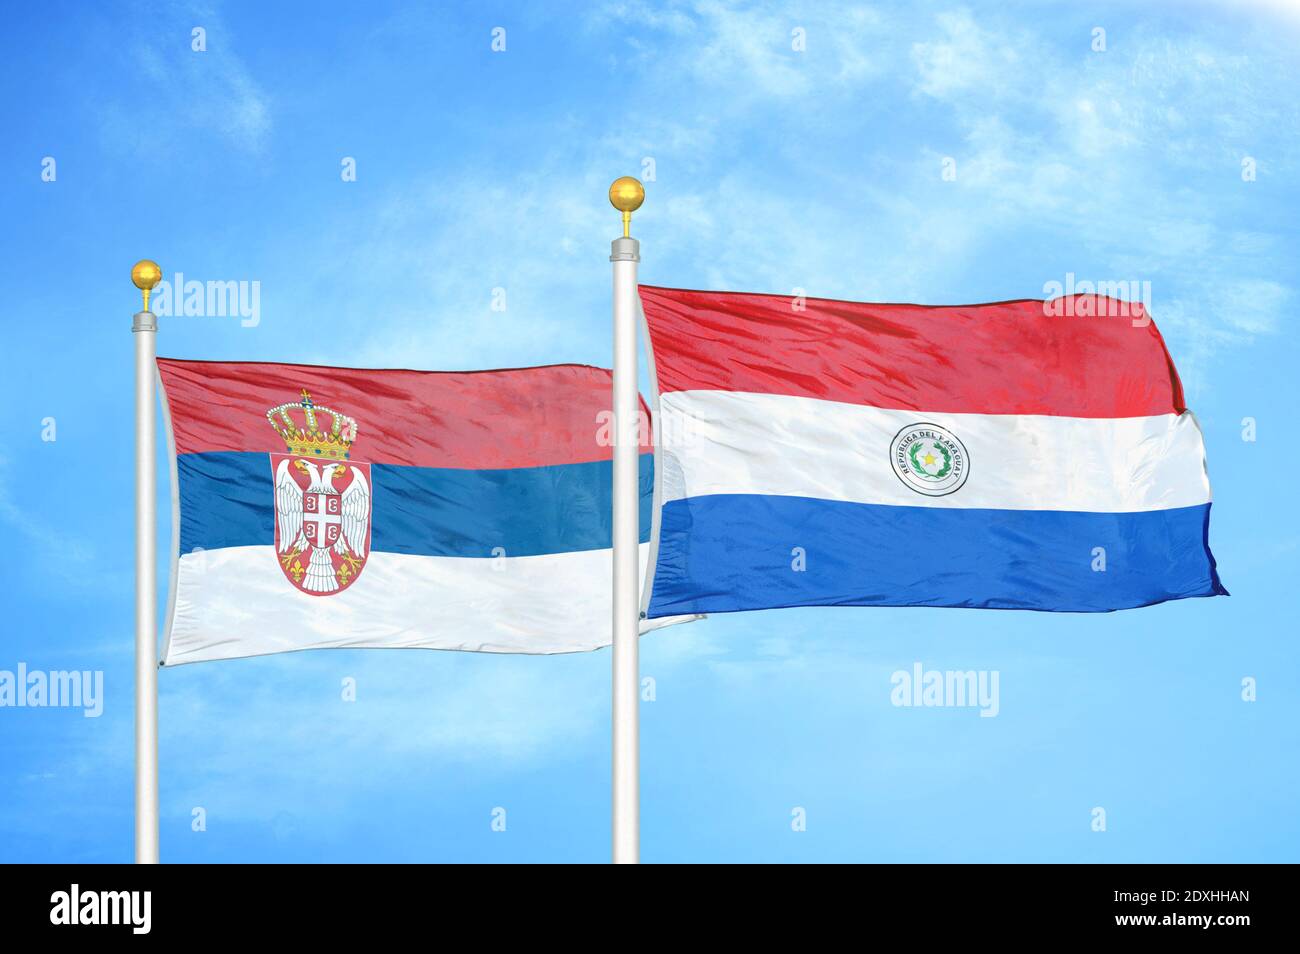 Paraguay serbien flagge -Fotos und -Bildmaterial in hoher